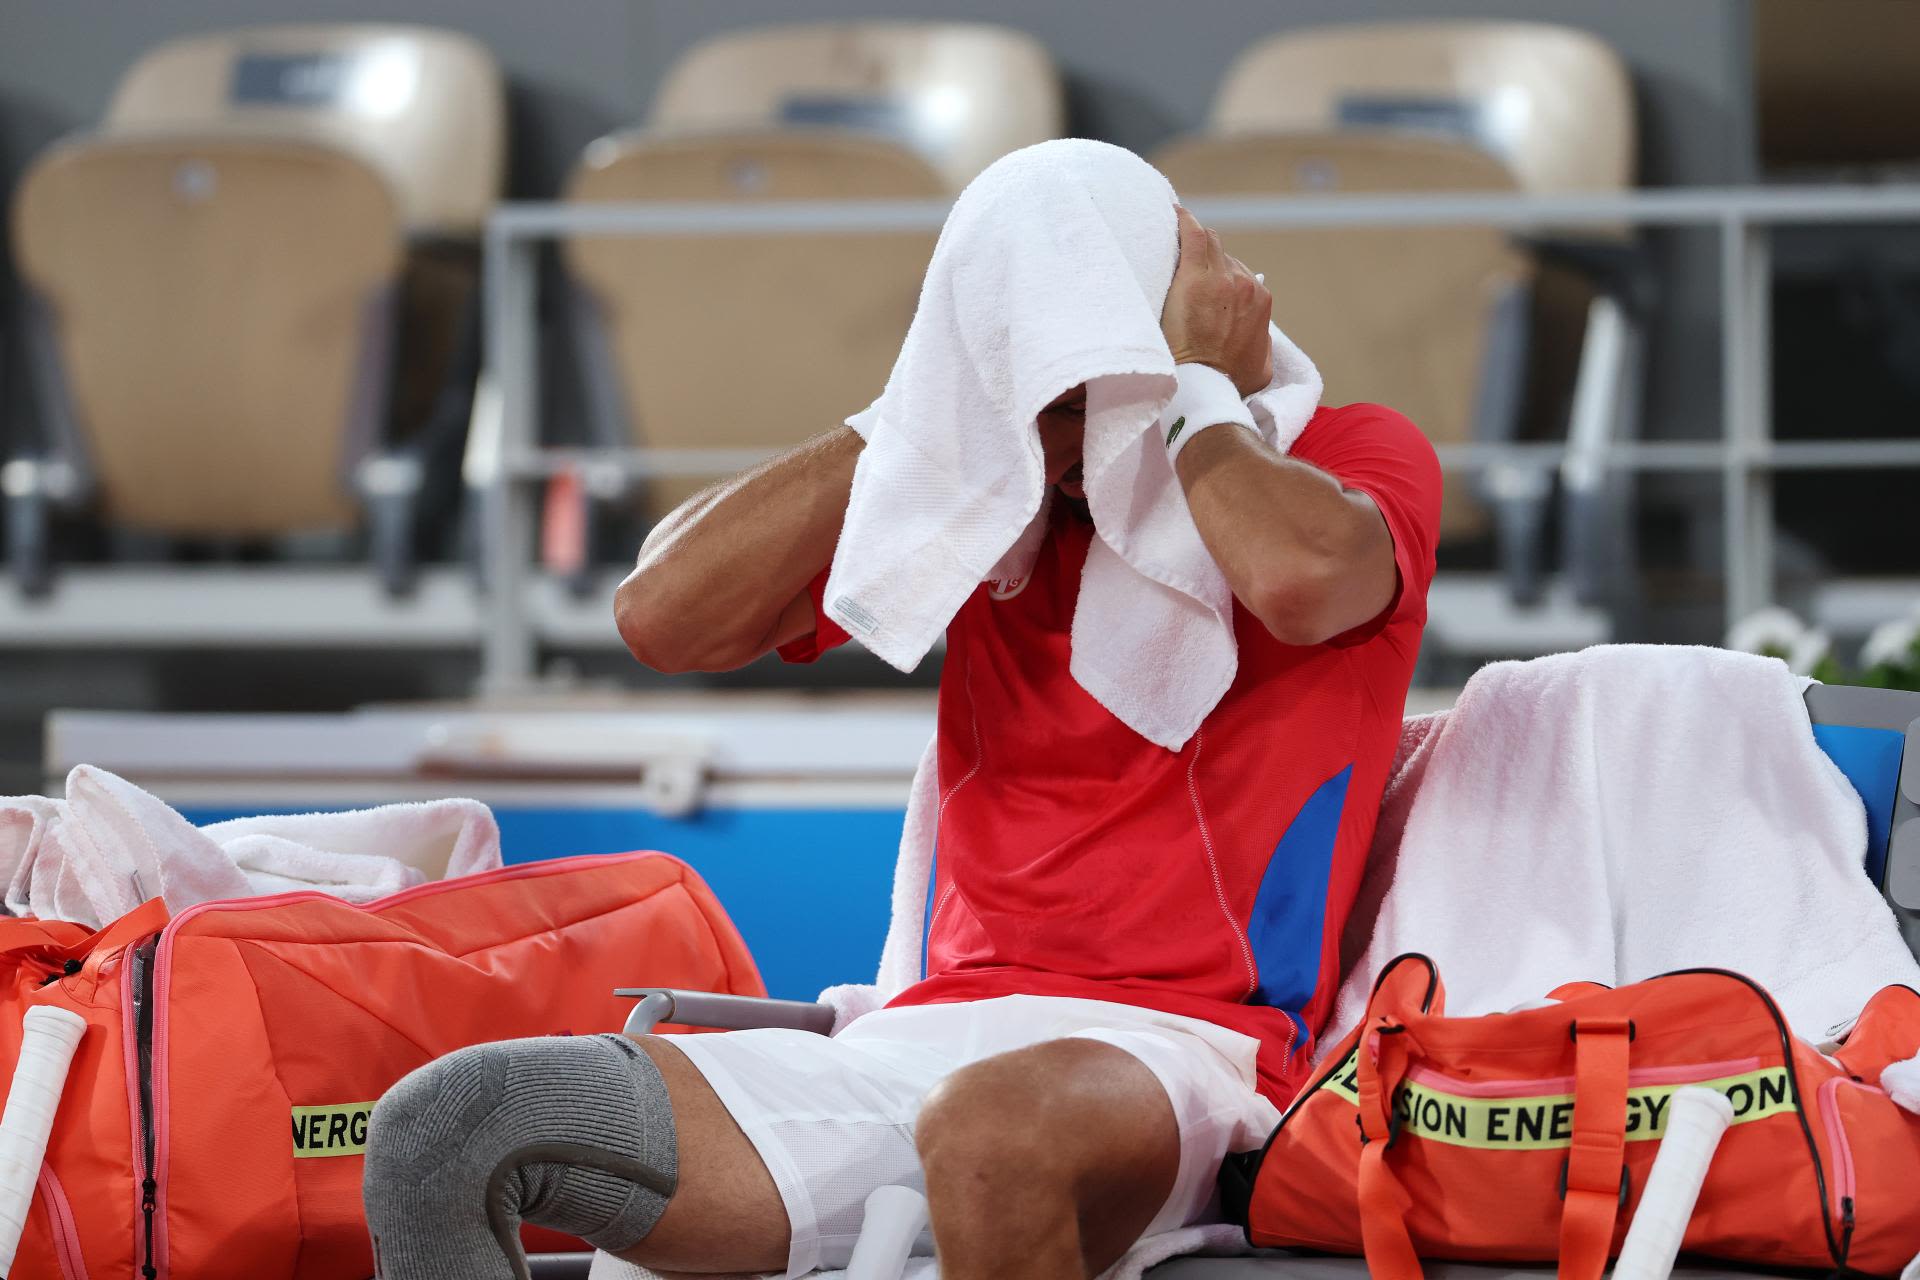 Novak Djokovic issues very concerning knee update... Fears worst-case scenario again